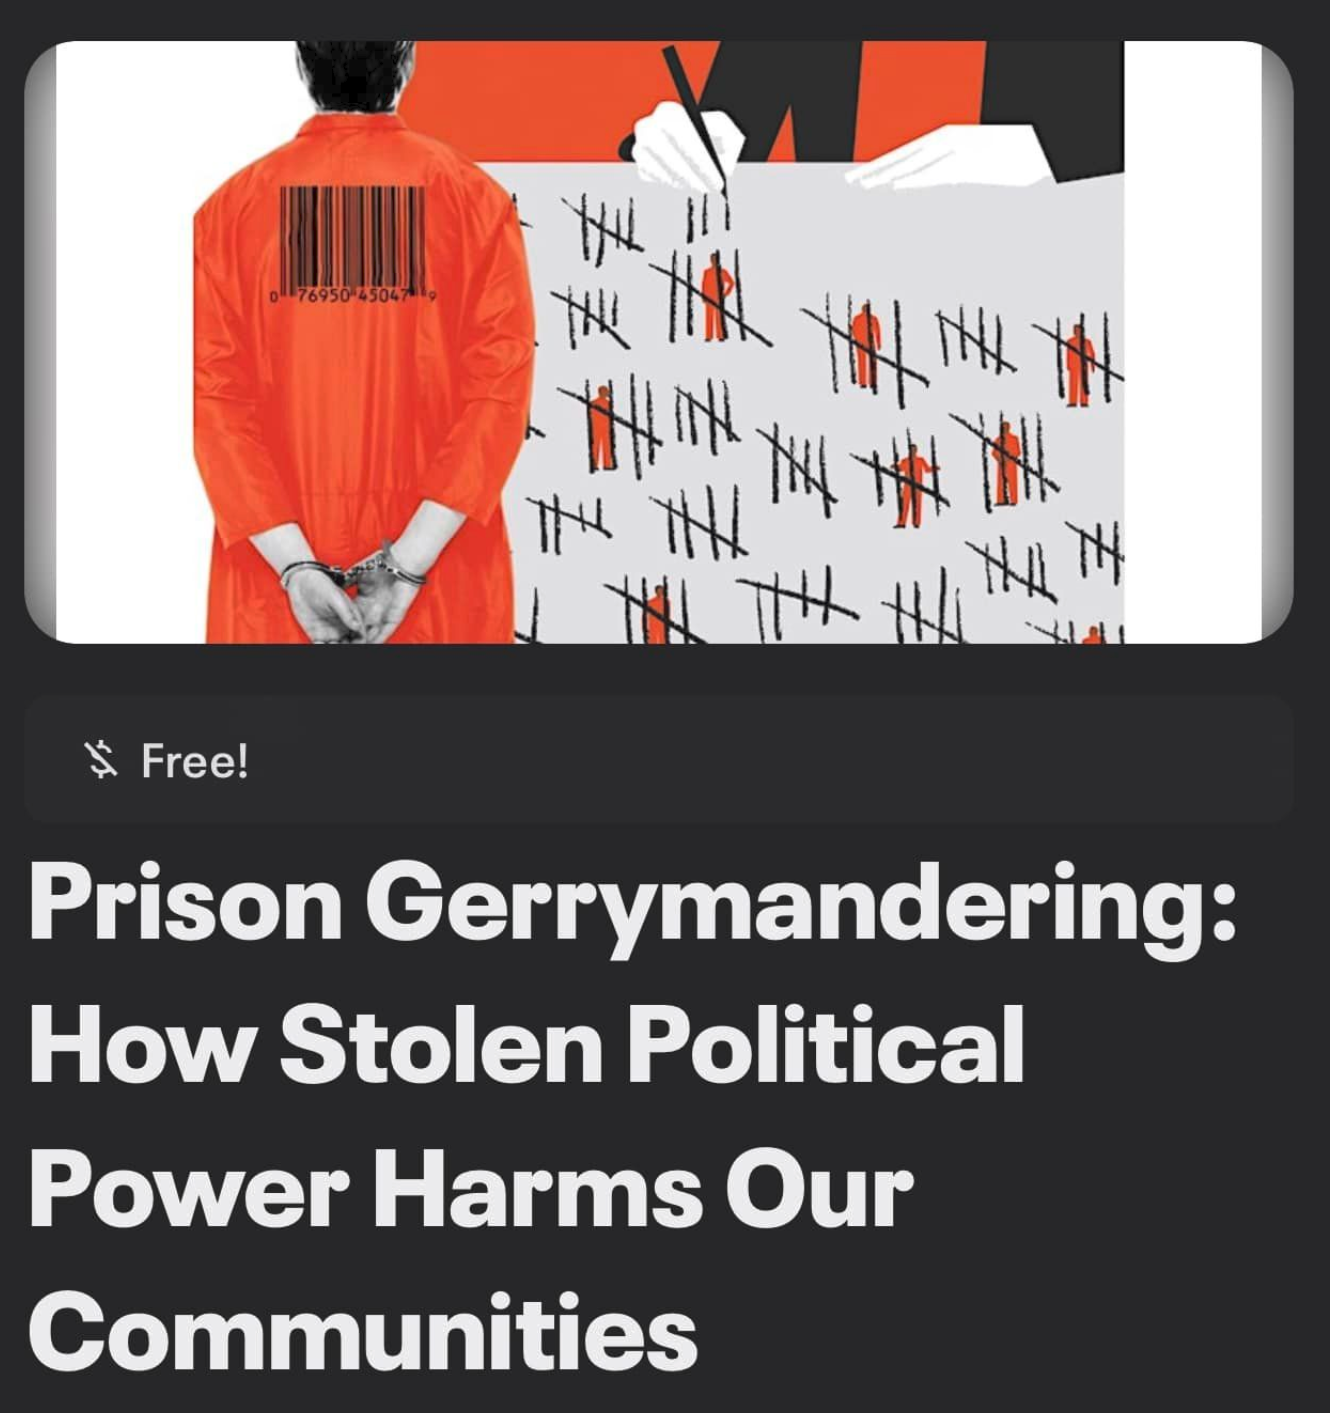 Don’t Miss VAAC’s Community Conversation on Prison Gerrymandering!